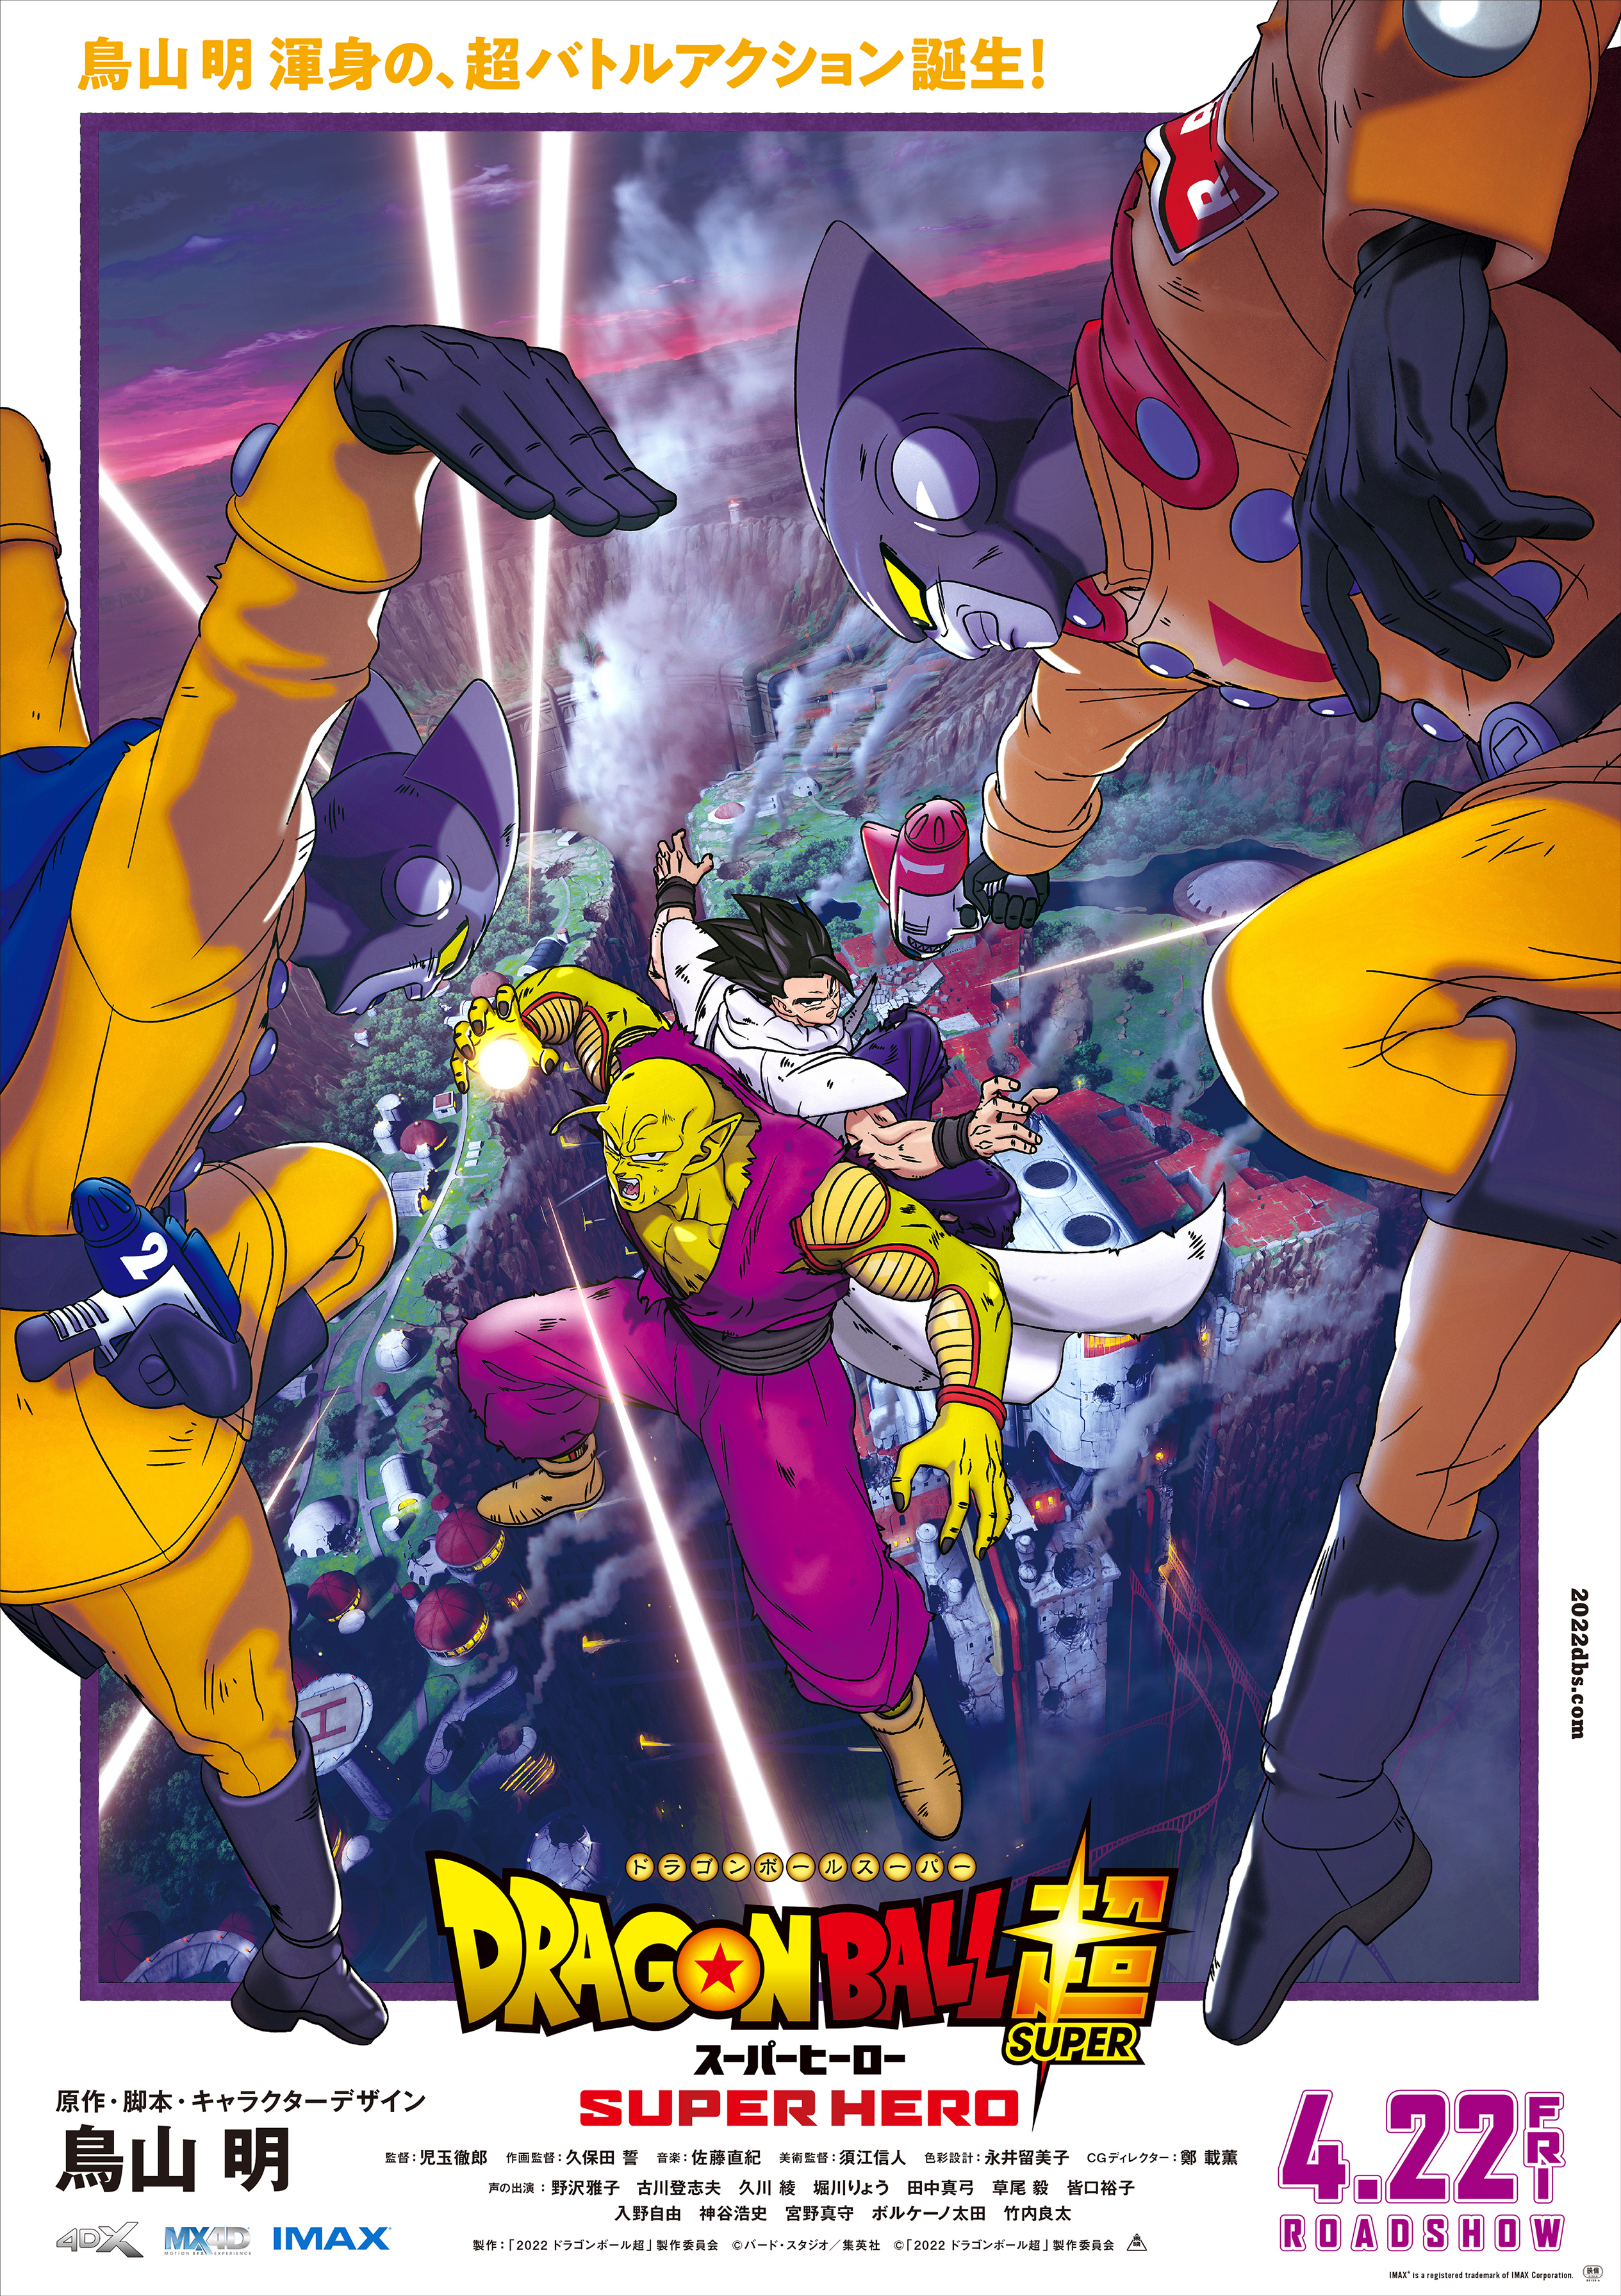 Dragon Ball Super: Super Hero second key visual